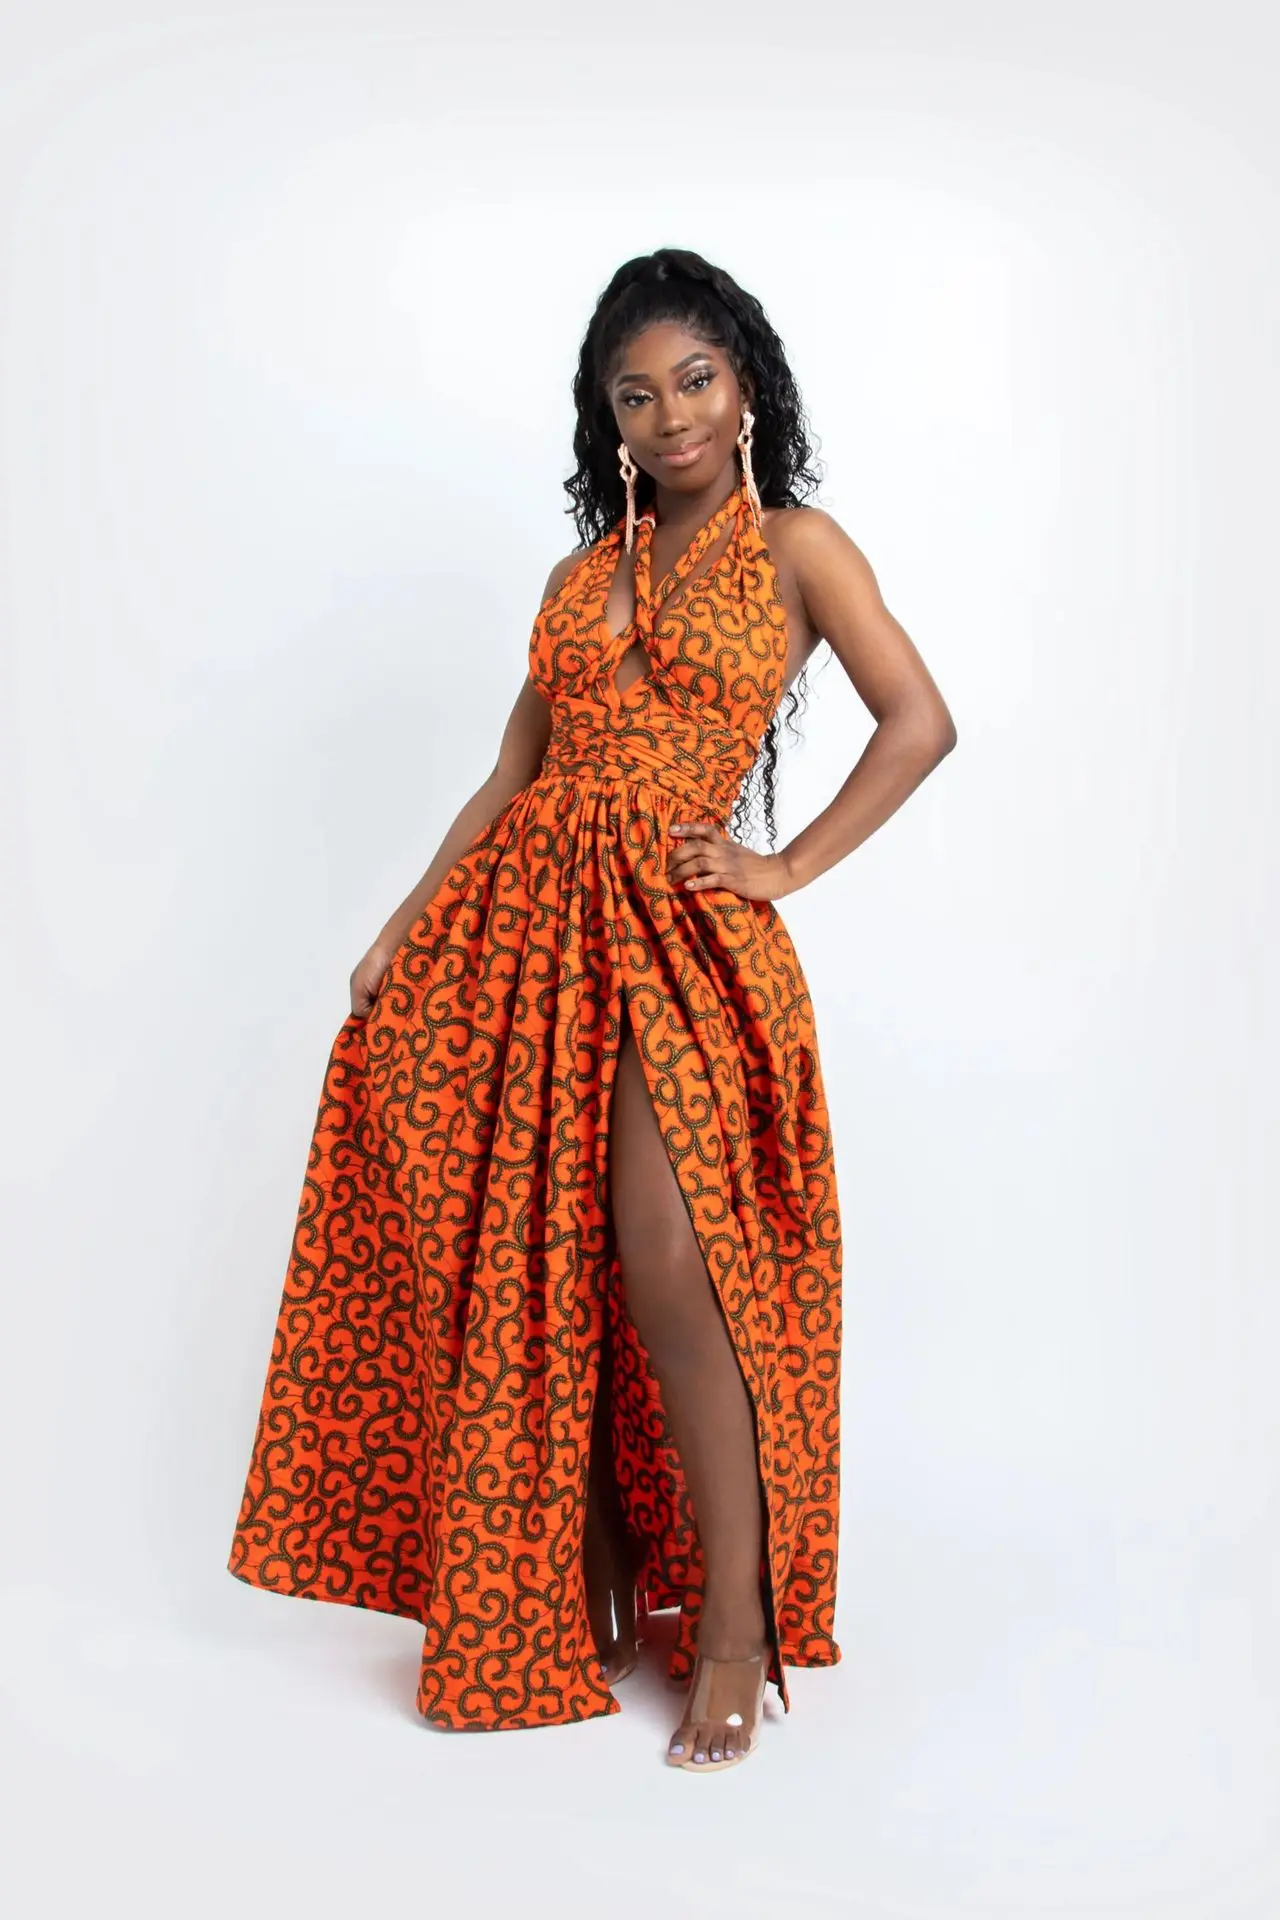 Longue robe africaine wax pour femmes 527